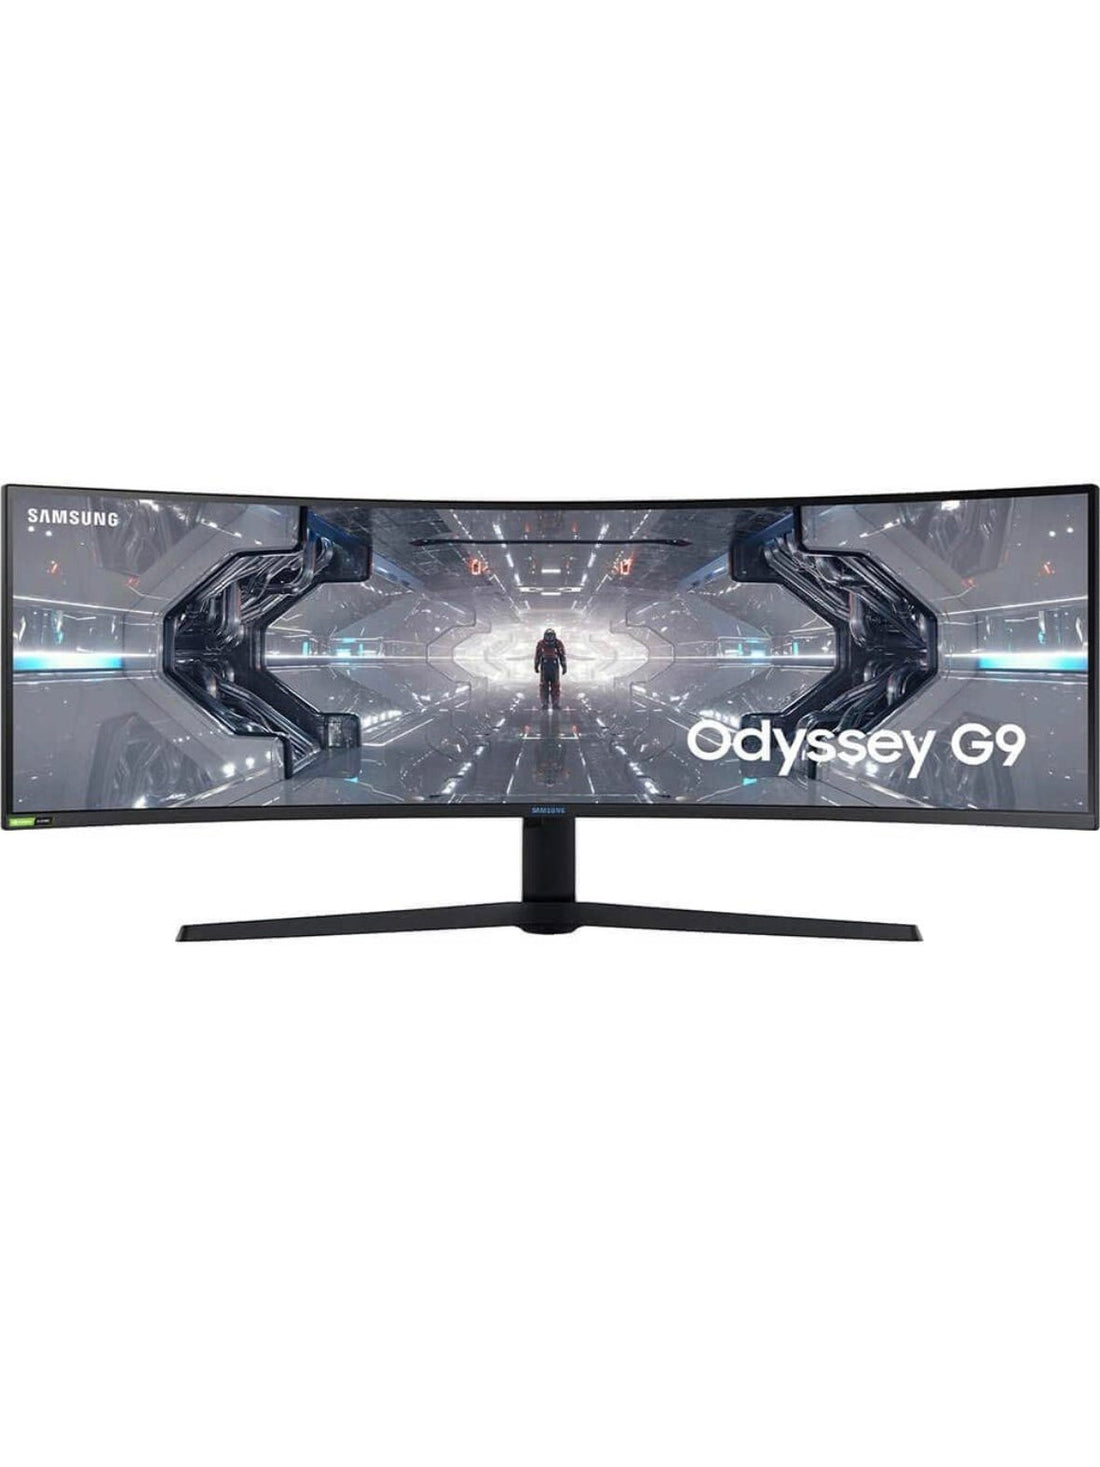 SAMSUNG 49” Odyssey G9 Gaming Monitor, 1000R Curved Screen, QLED, Dual QHD Display, 240Hz, NVIDIA G-SYNC and FreeSync Premium Pro, LC49G95TSSNXZA, White